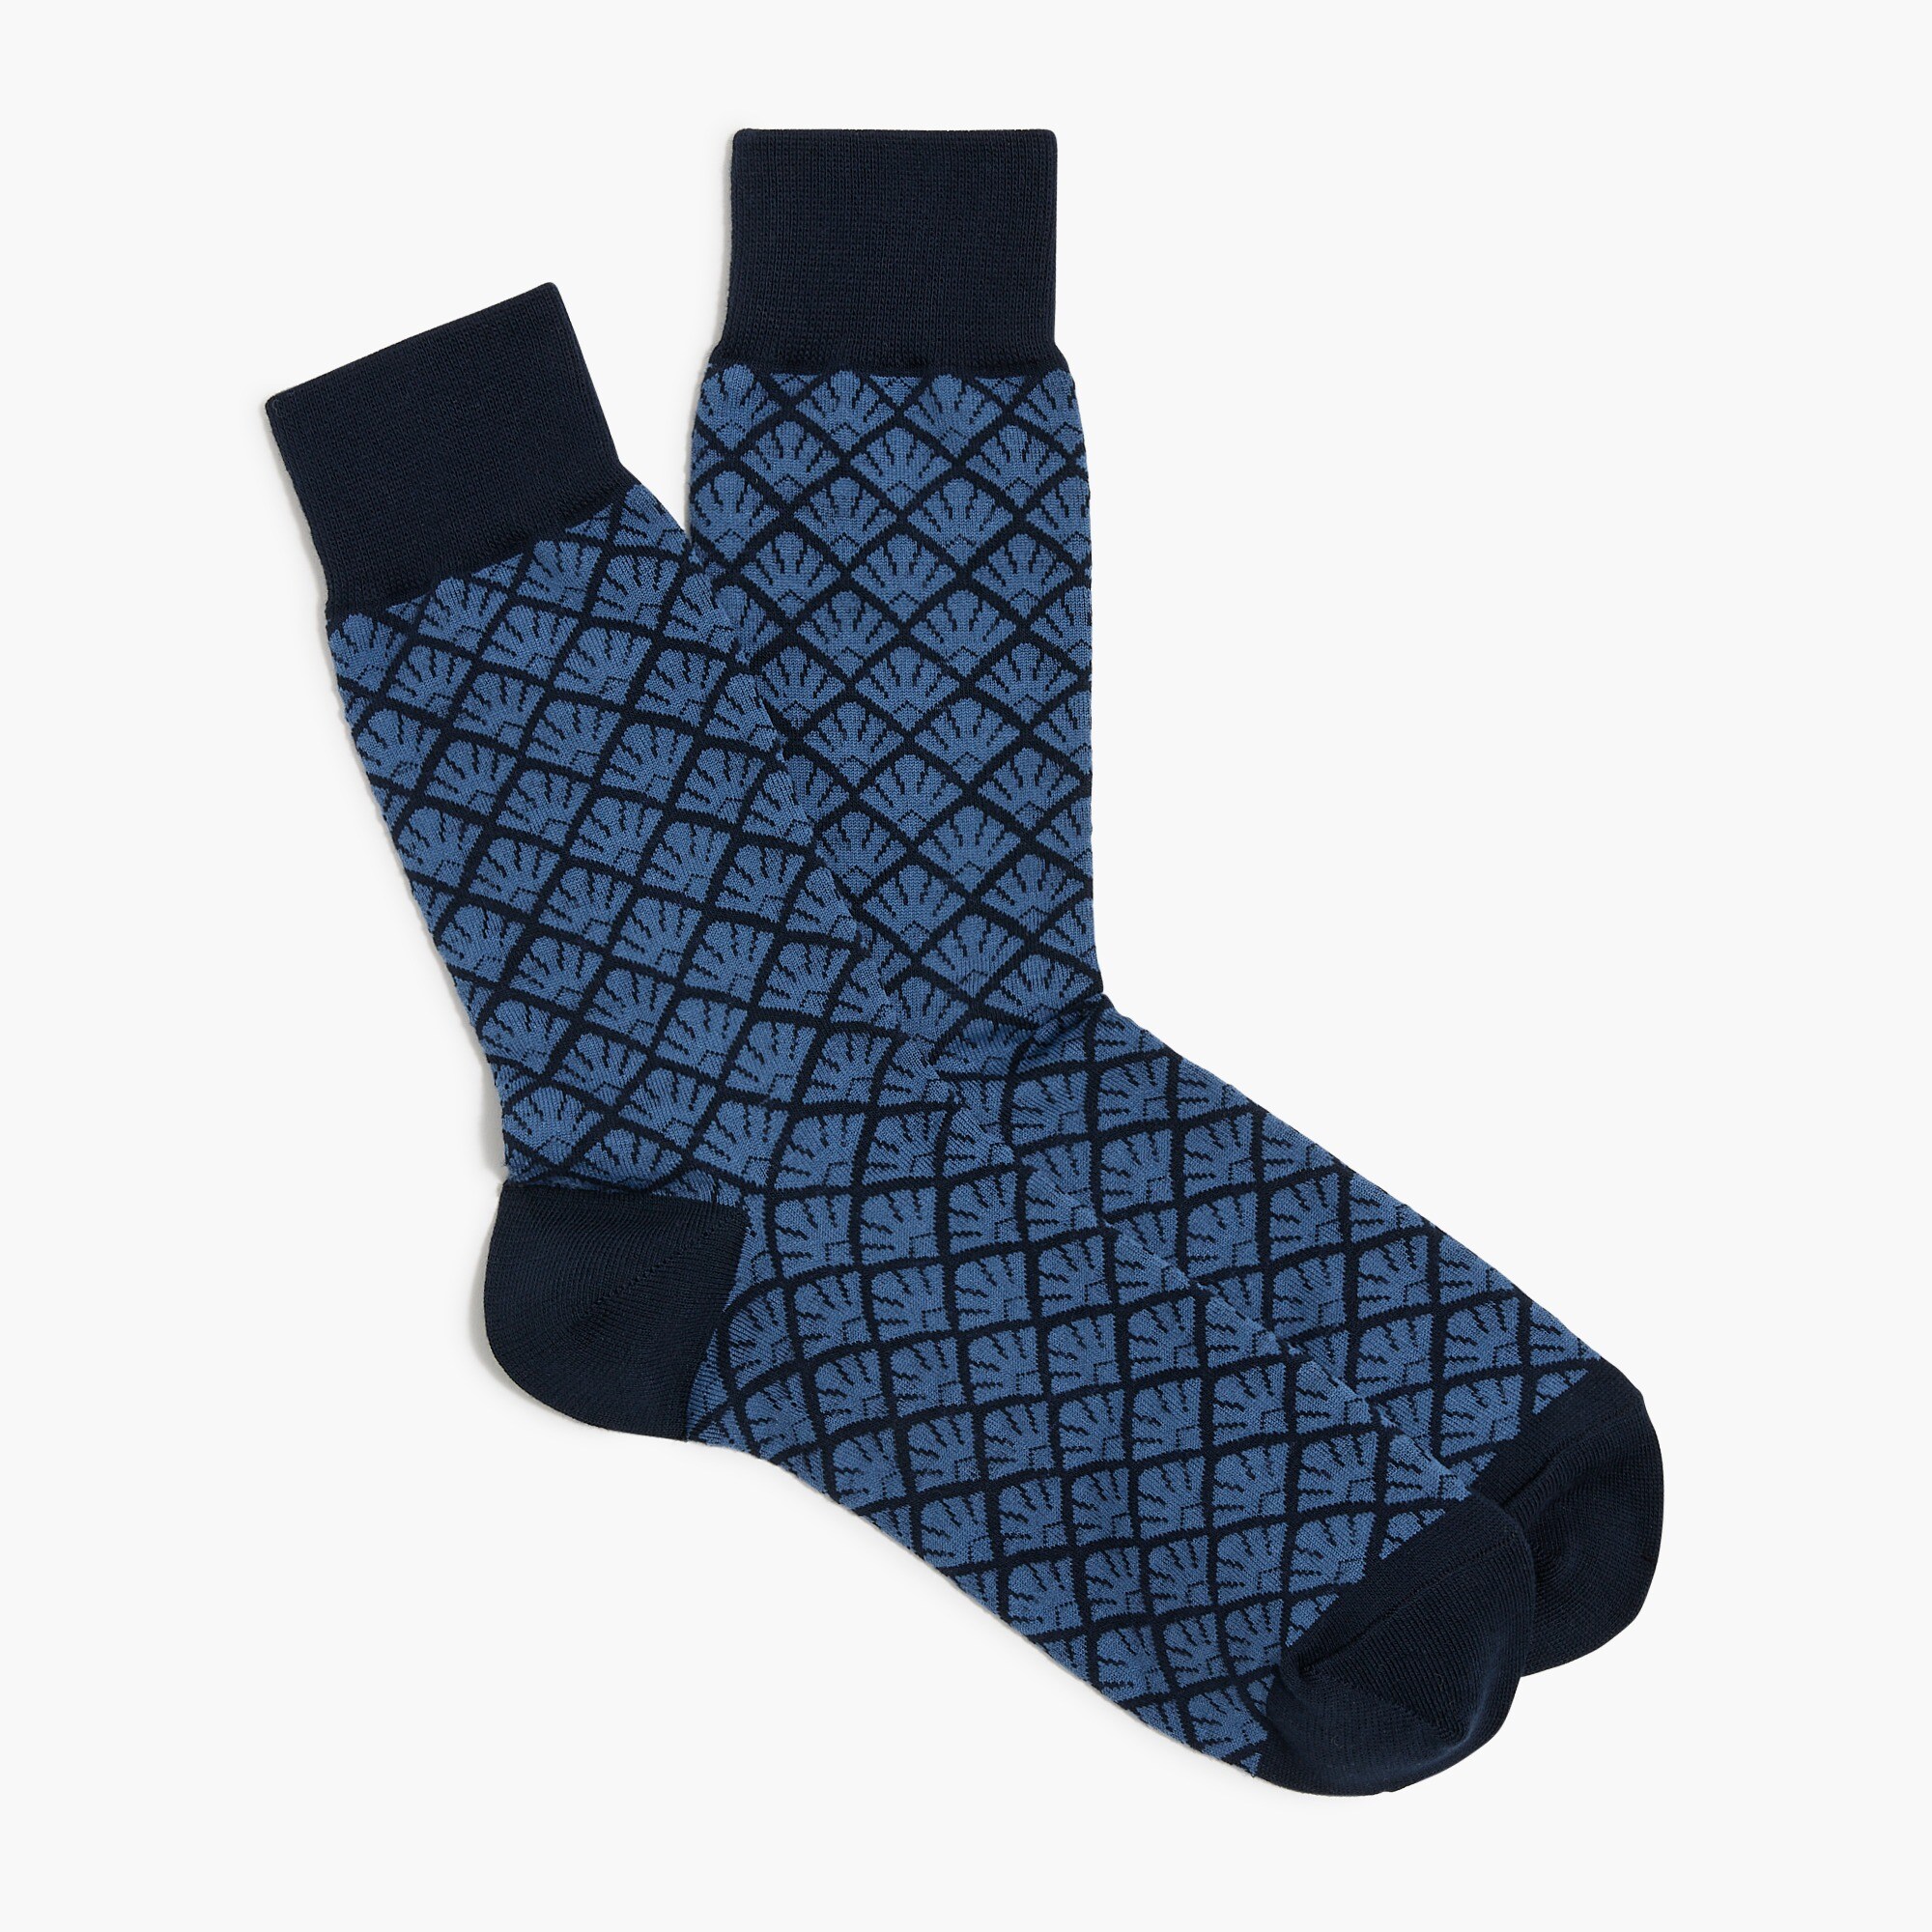  Printed socks